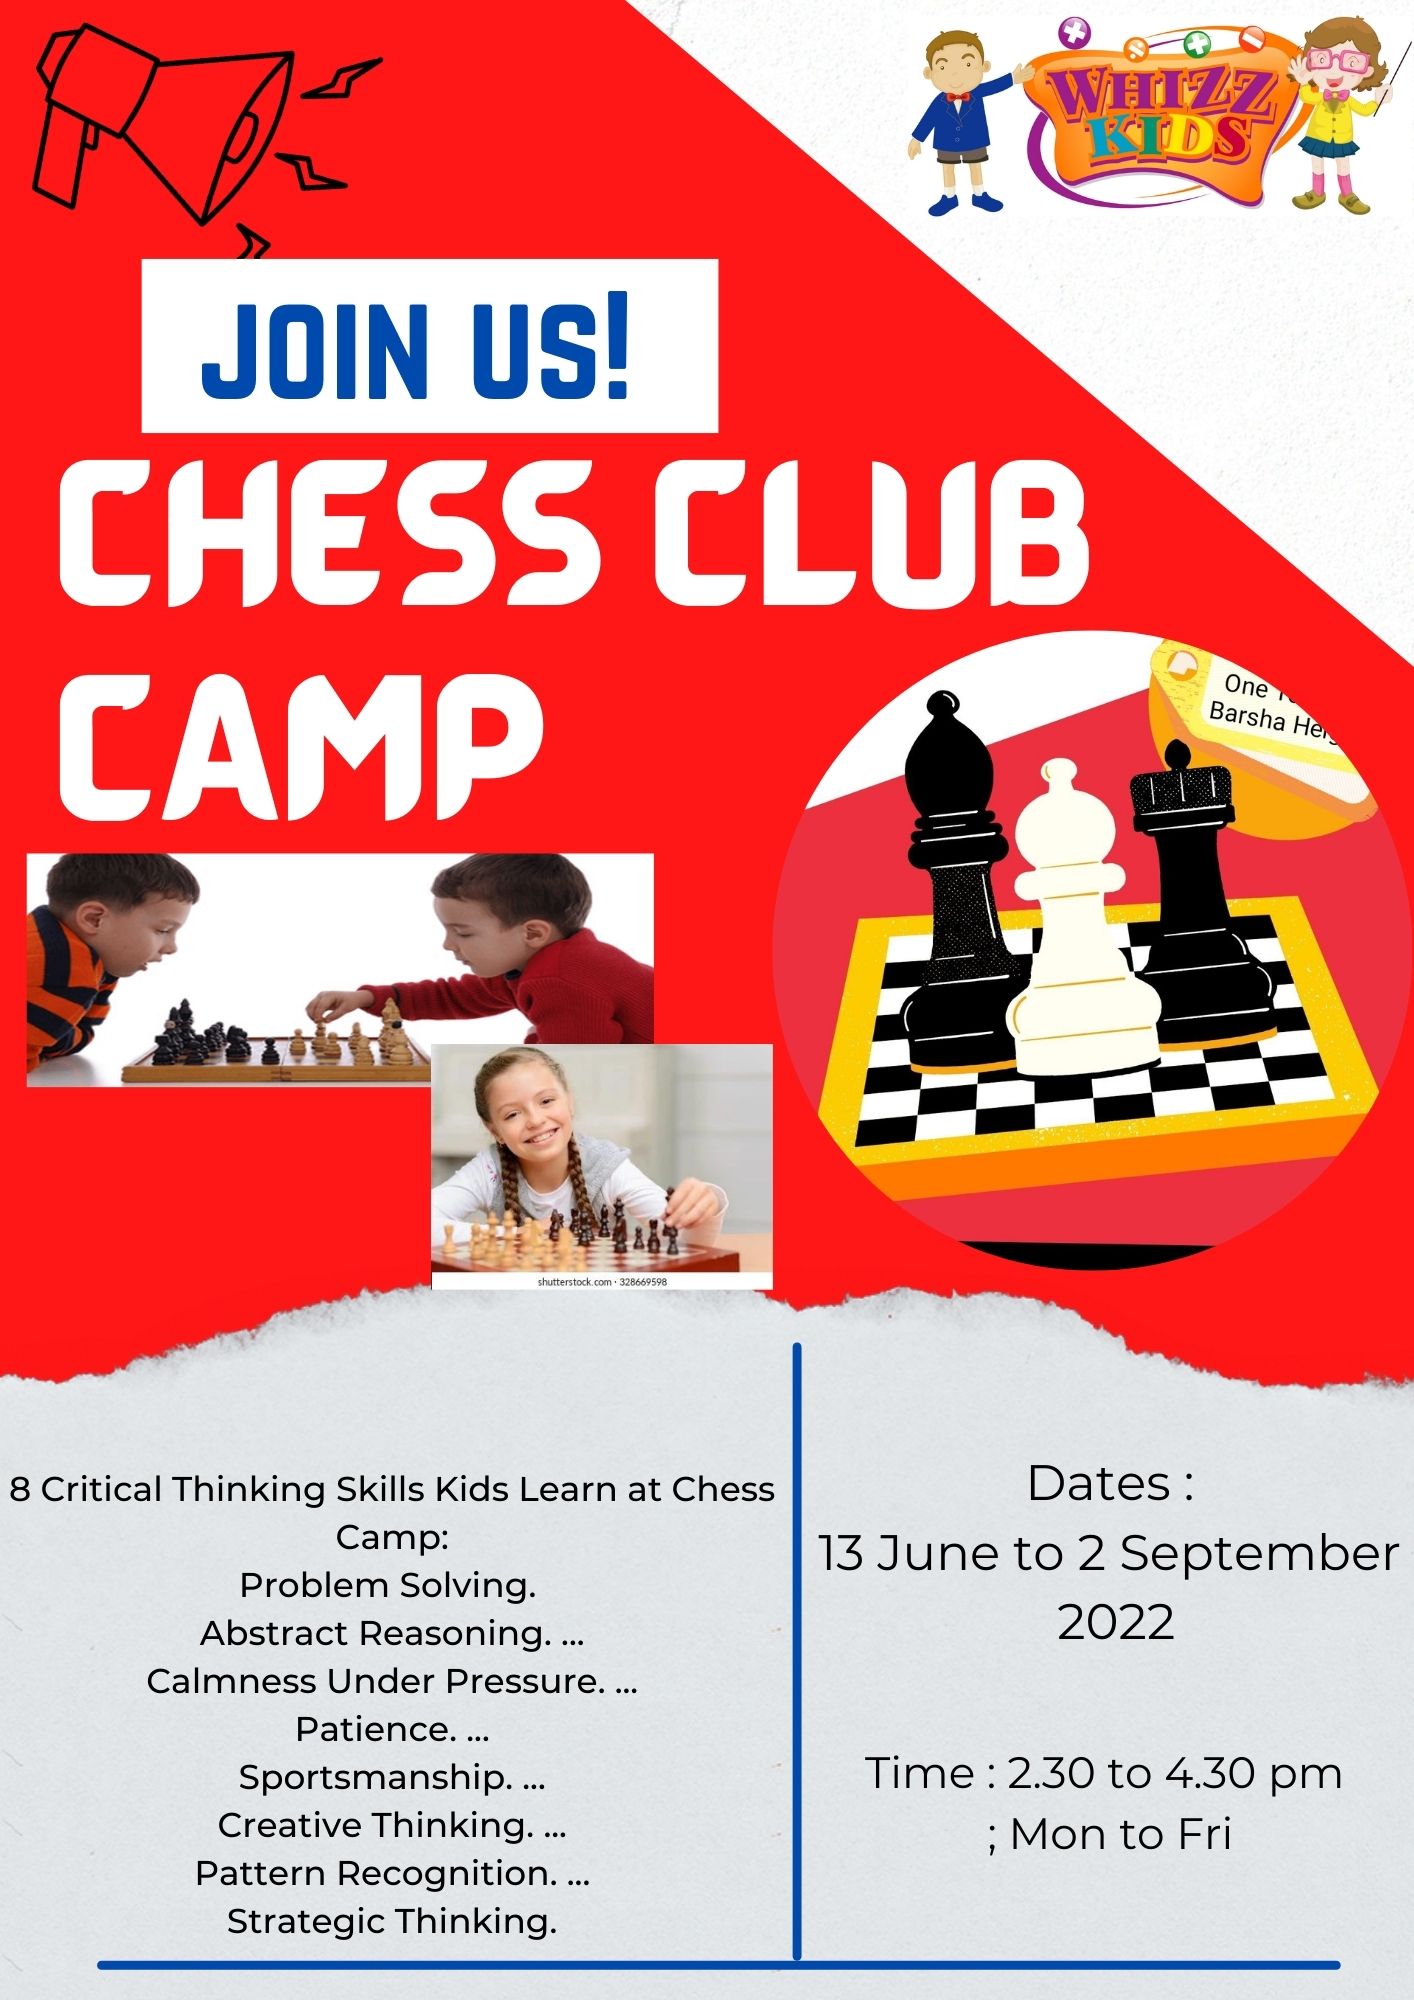 Chess Club Camp Chess Summer Camp Near me whizzkids